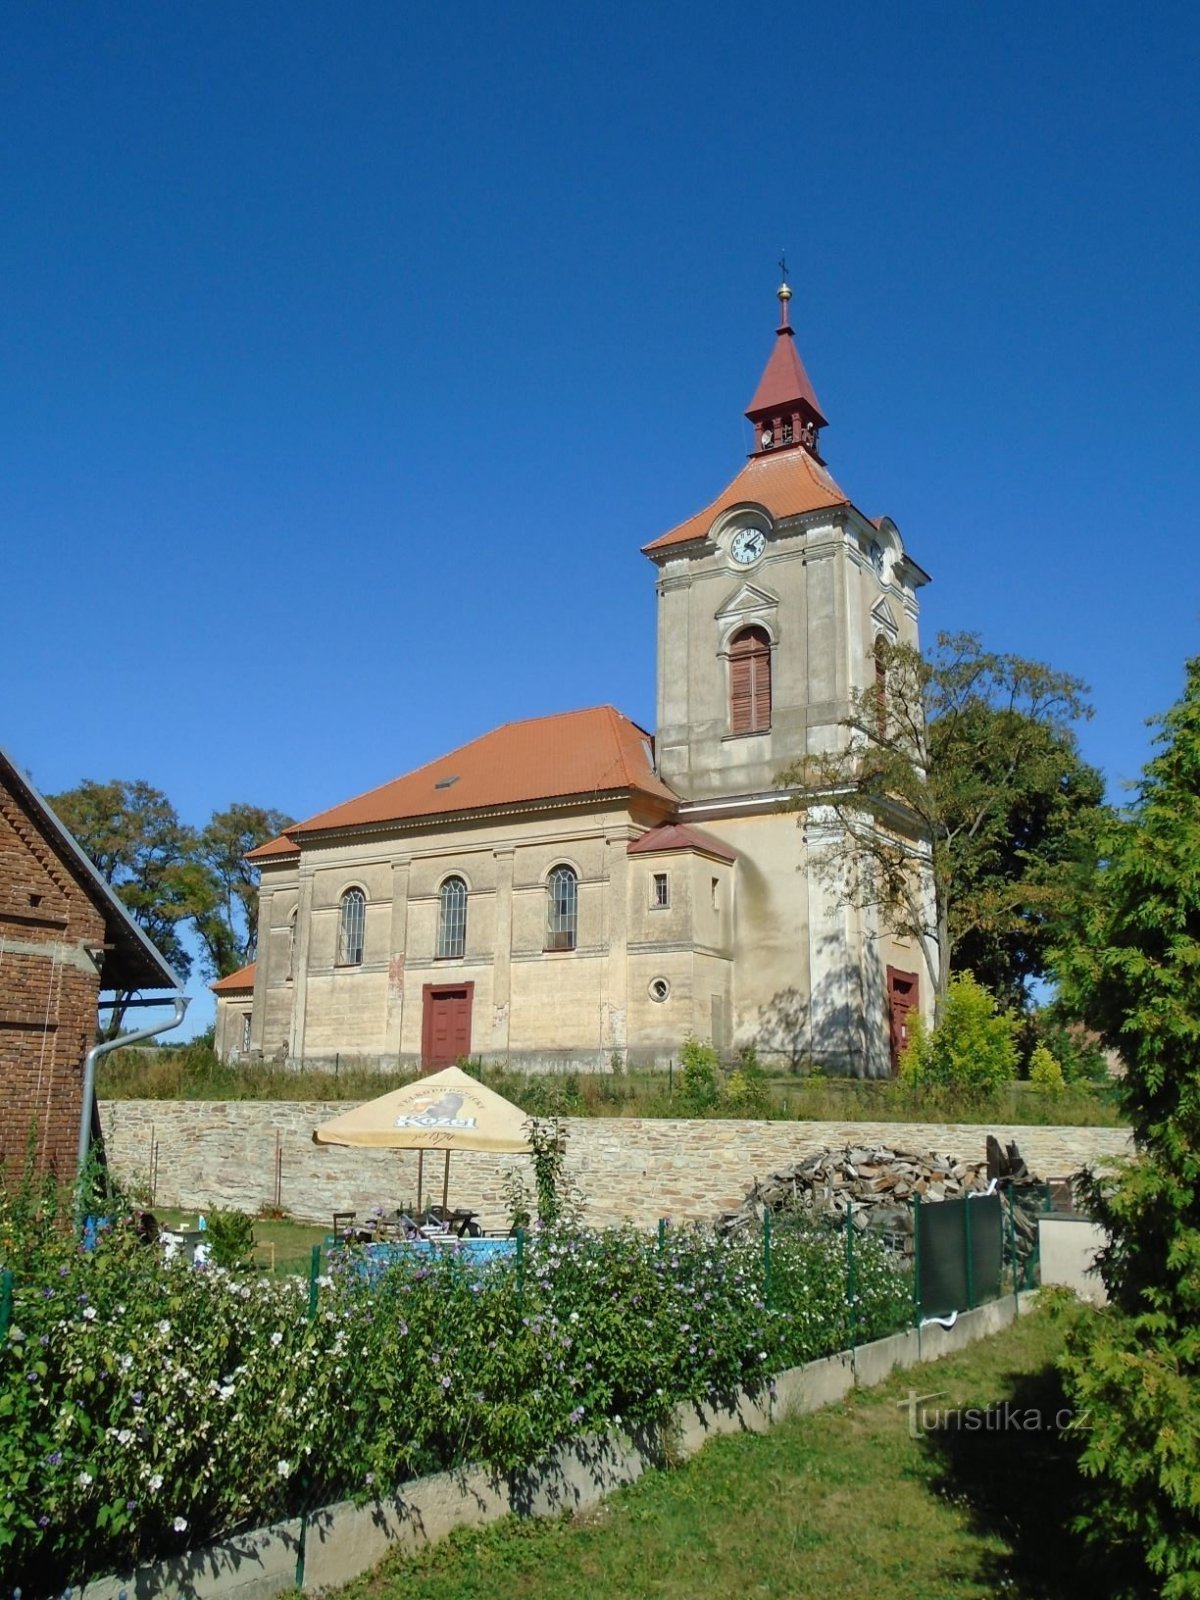 Cerkev sv. Petra in Pavla (Jeníkovice, 6.8.2018. avgust XNUMX)